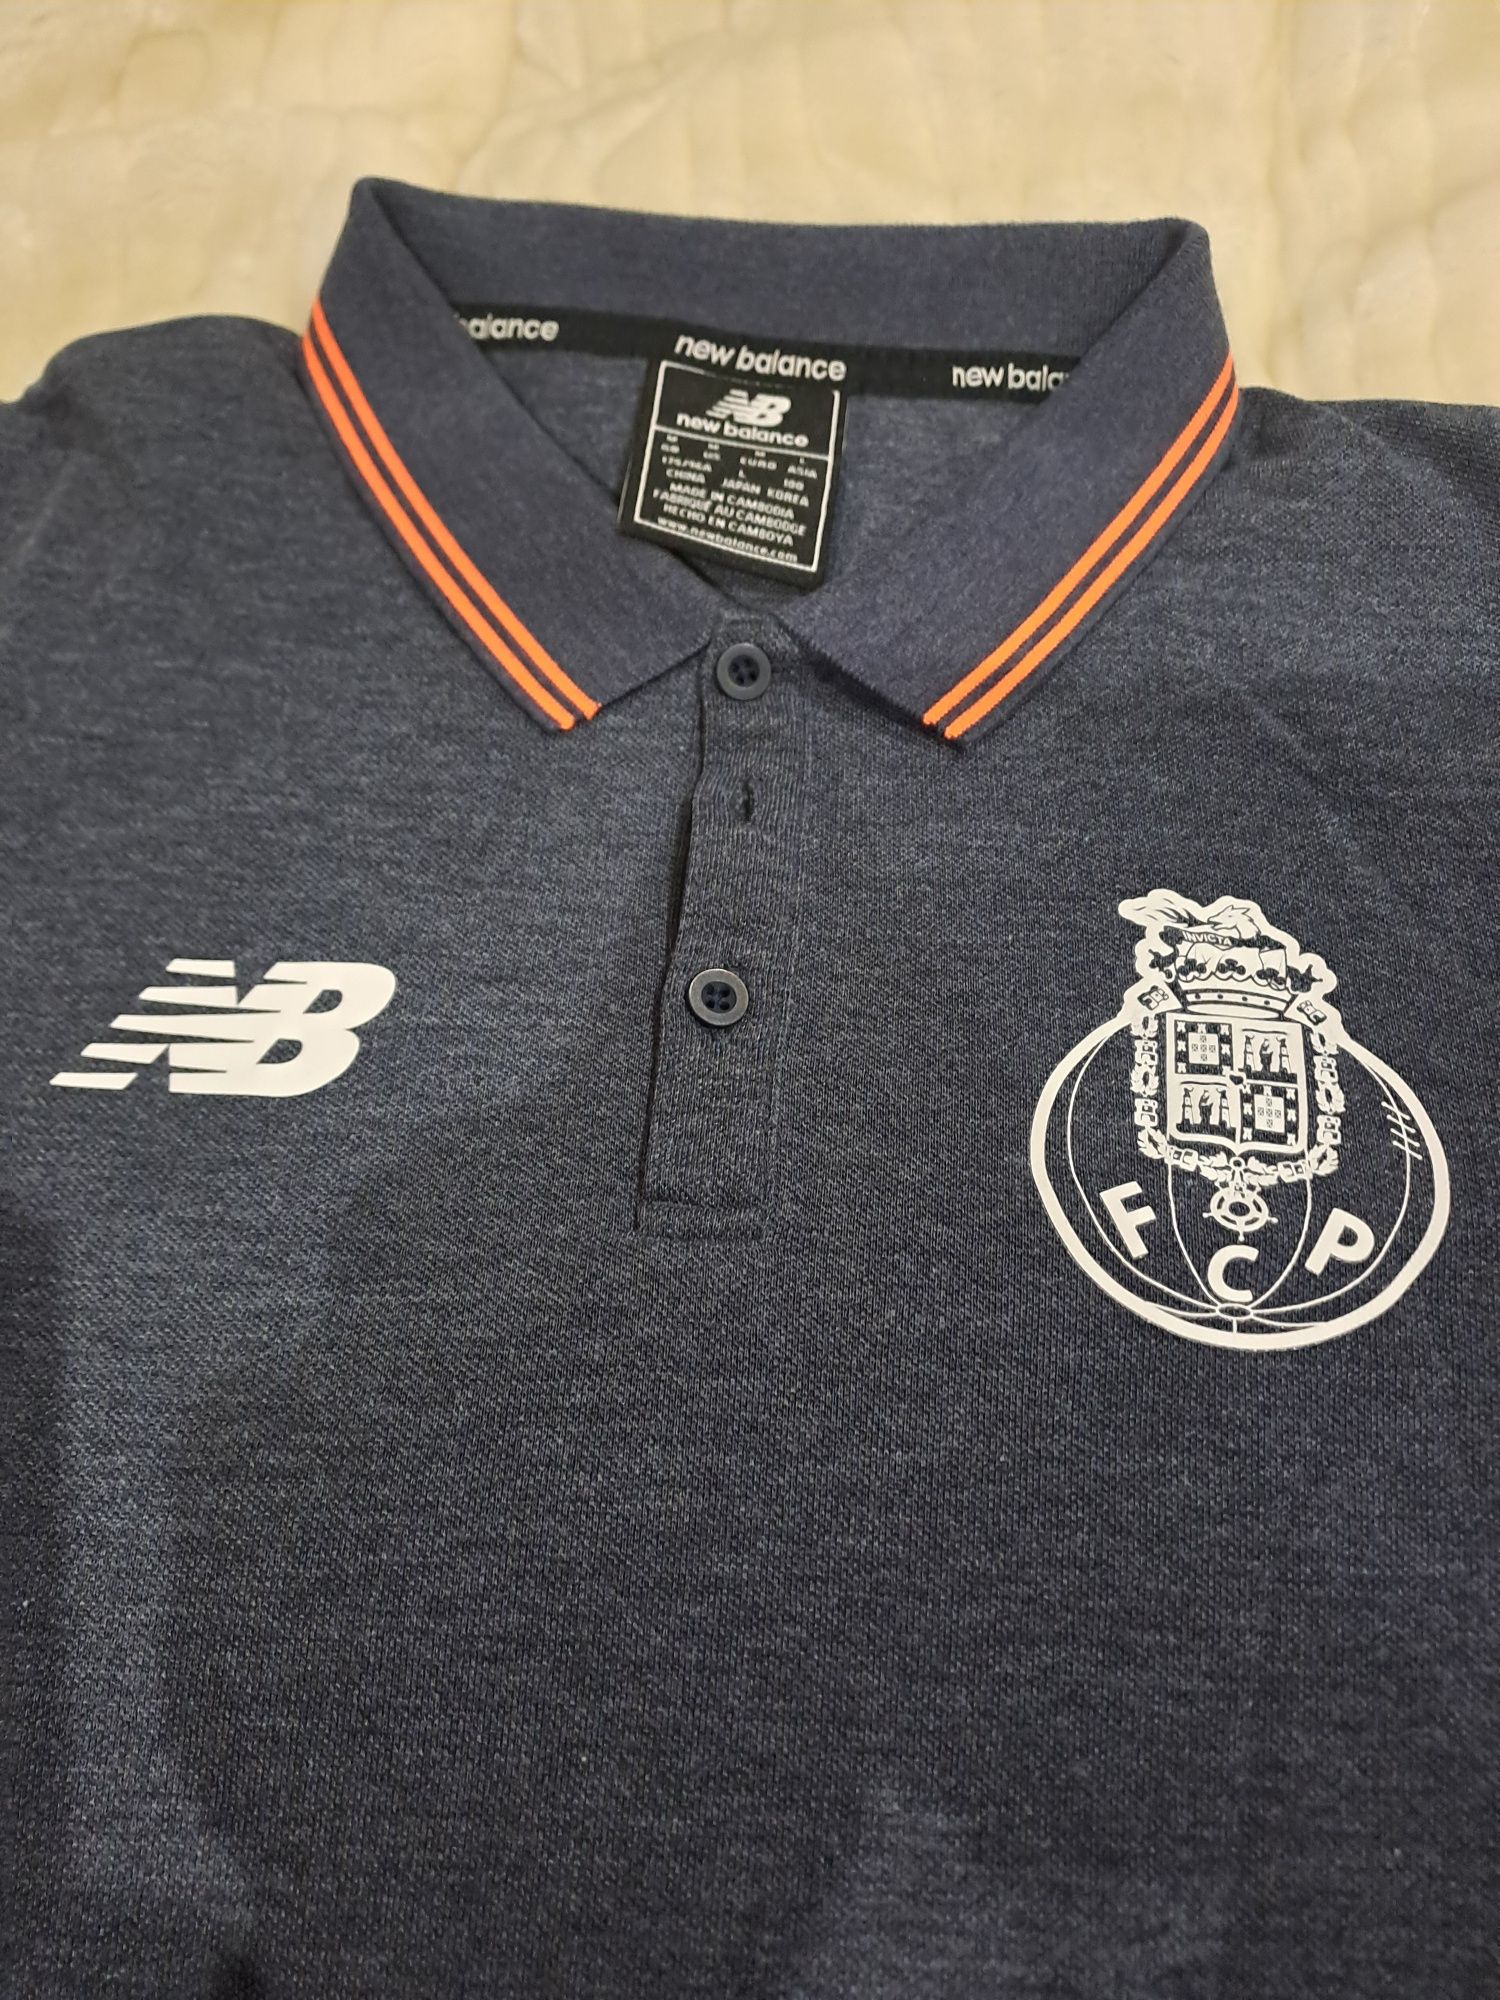 Futebol clube do Porto -Polo + camisola de desporto cardada New Balanc